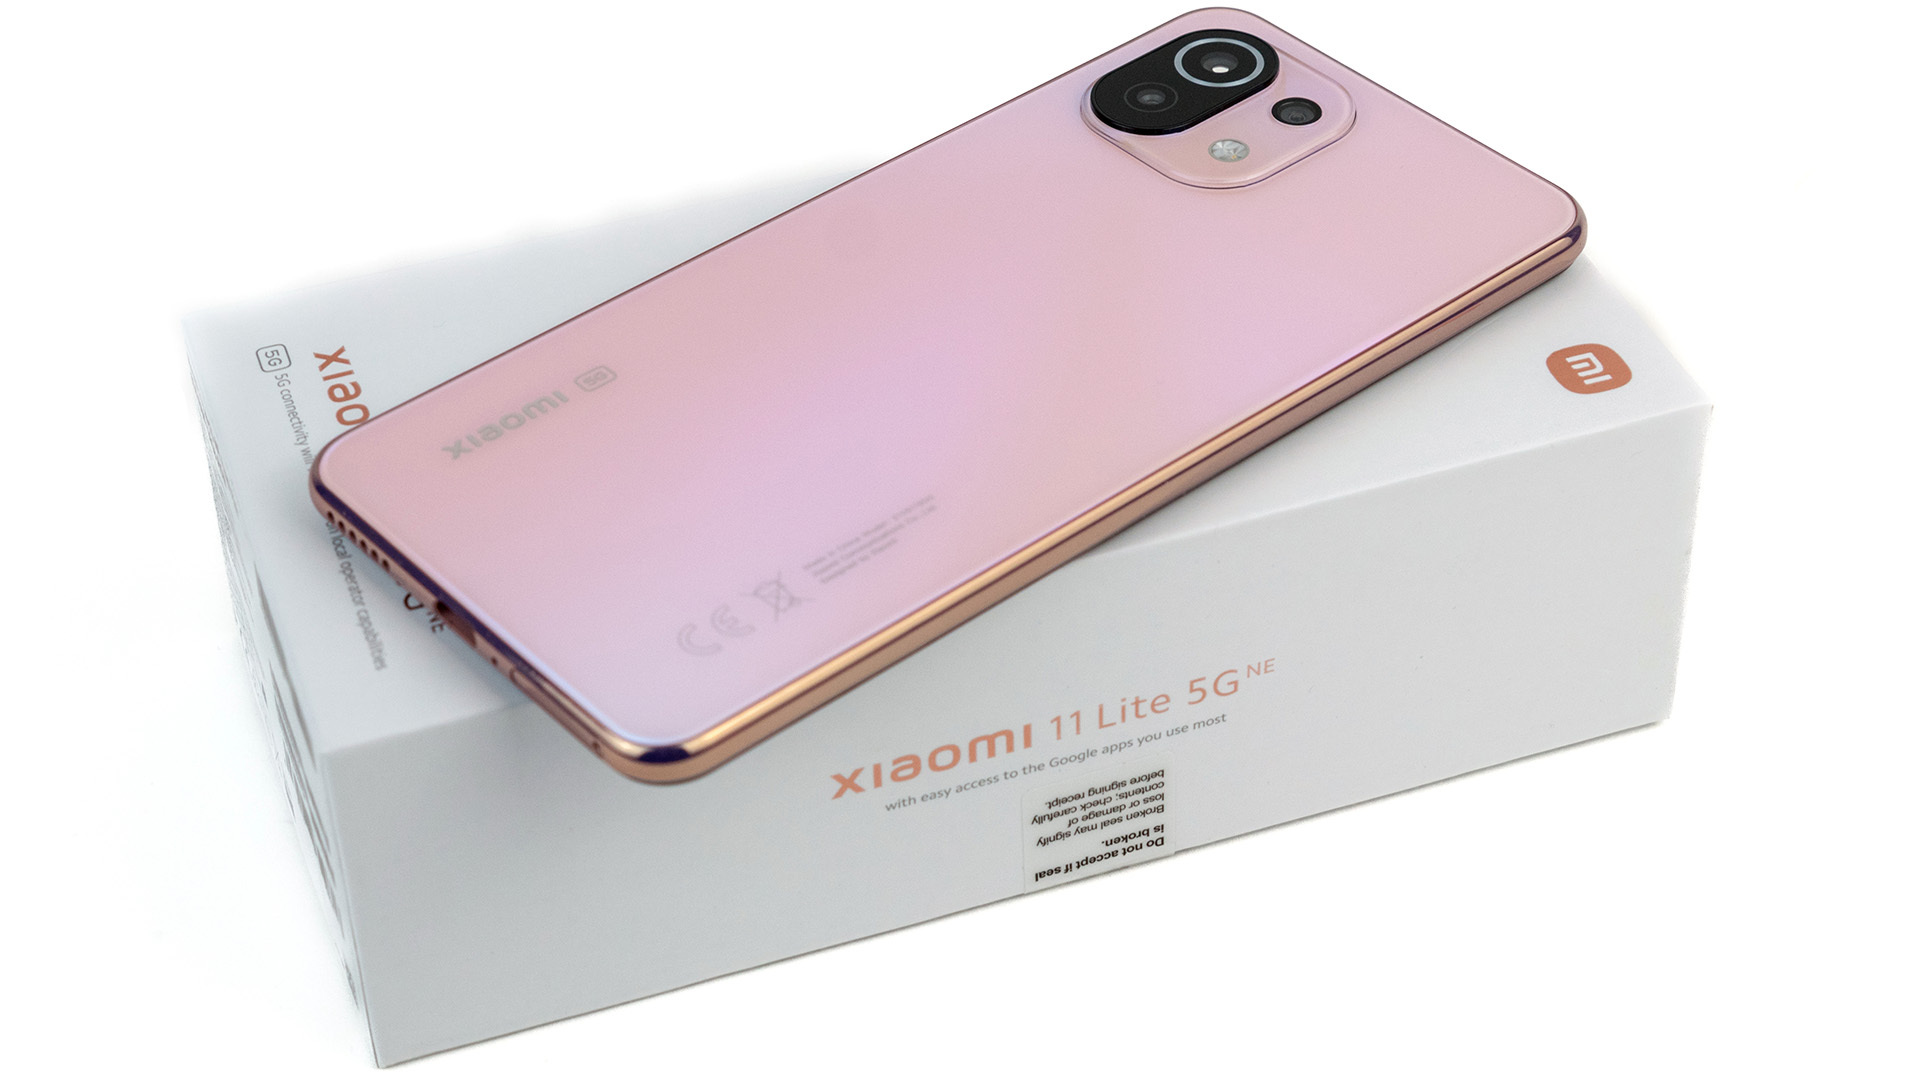 Xiaomi 11 Lite 5G NE smartphone review: The top seller gets fine